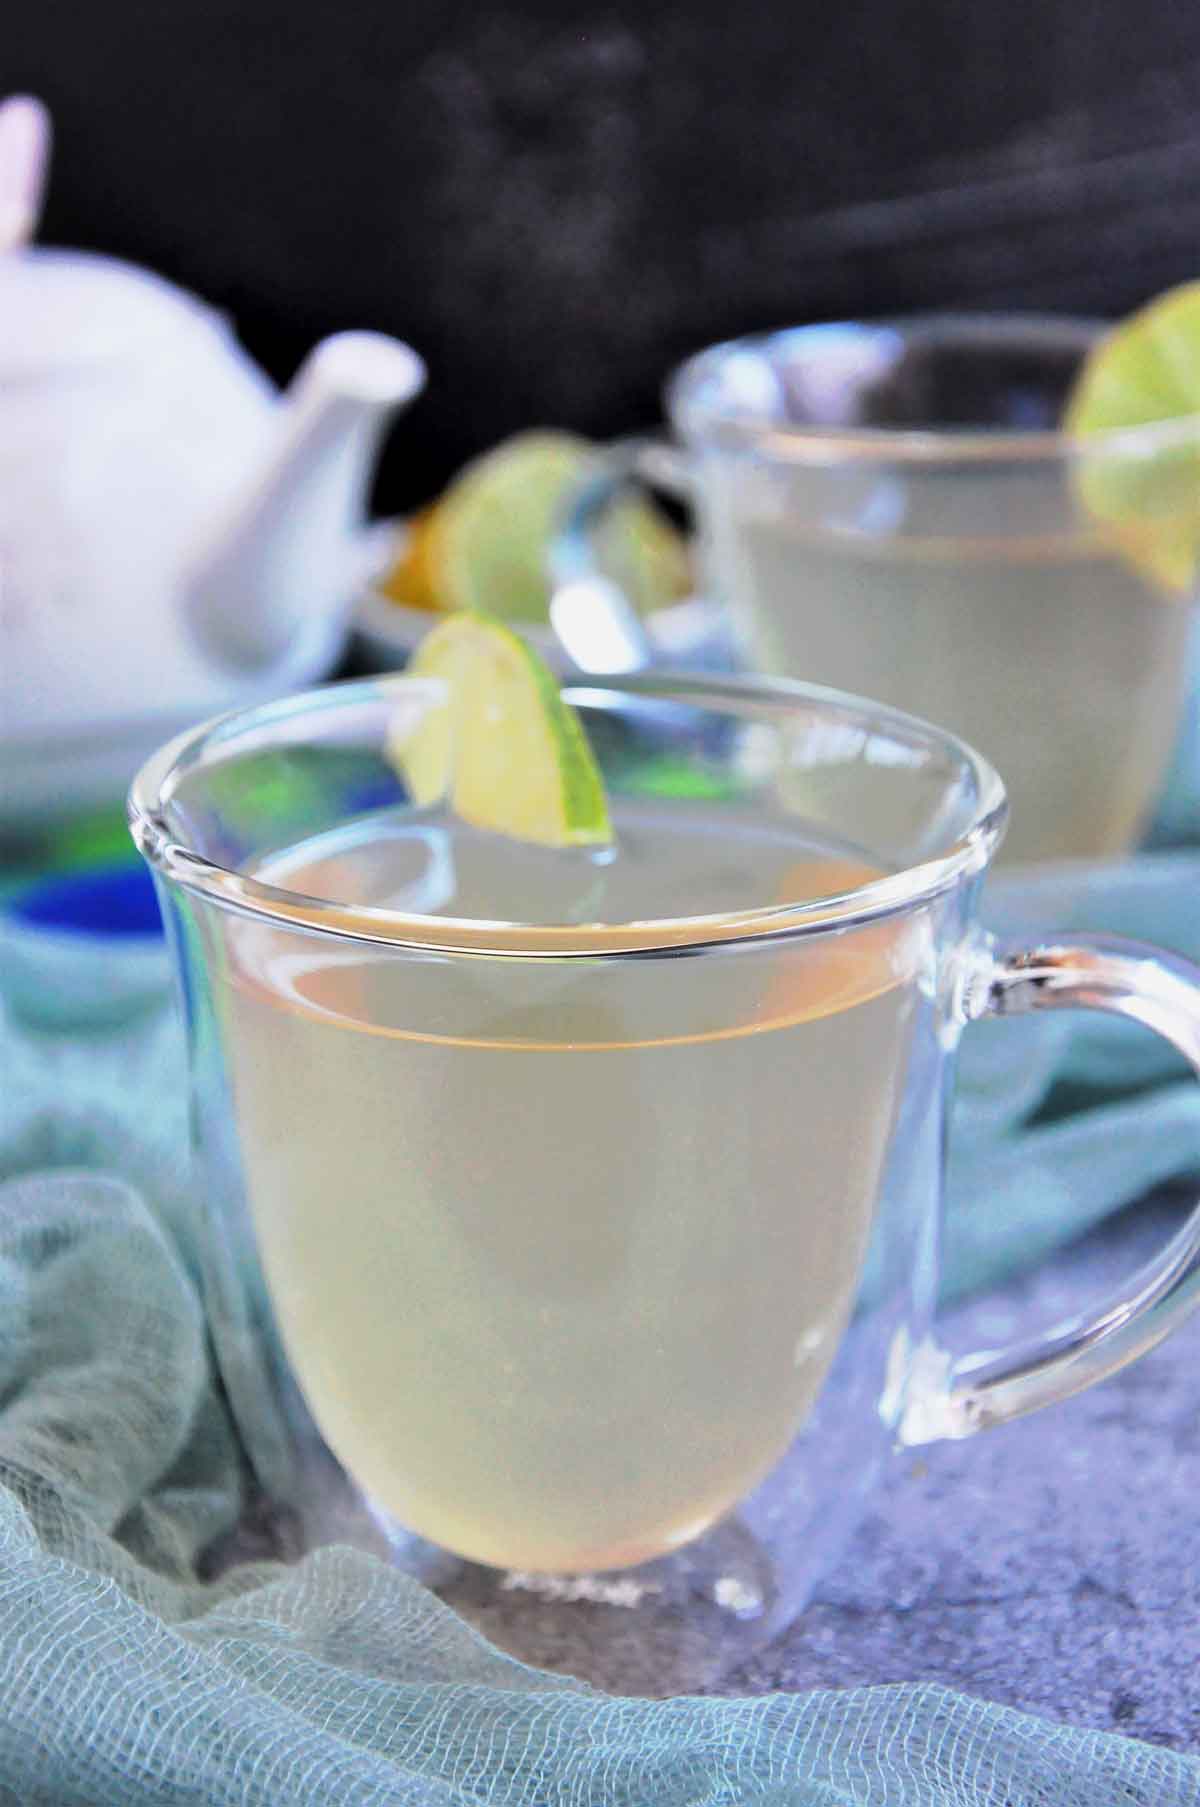 Lemonrass tea in a cup.